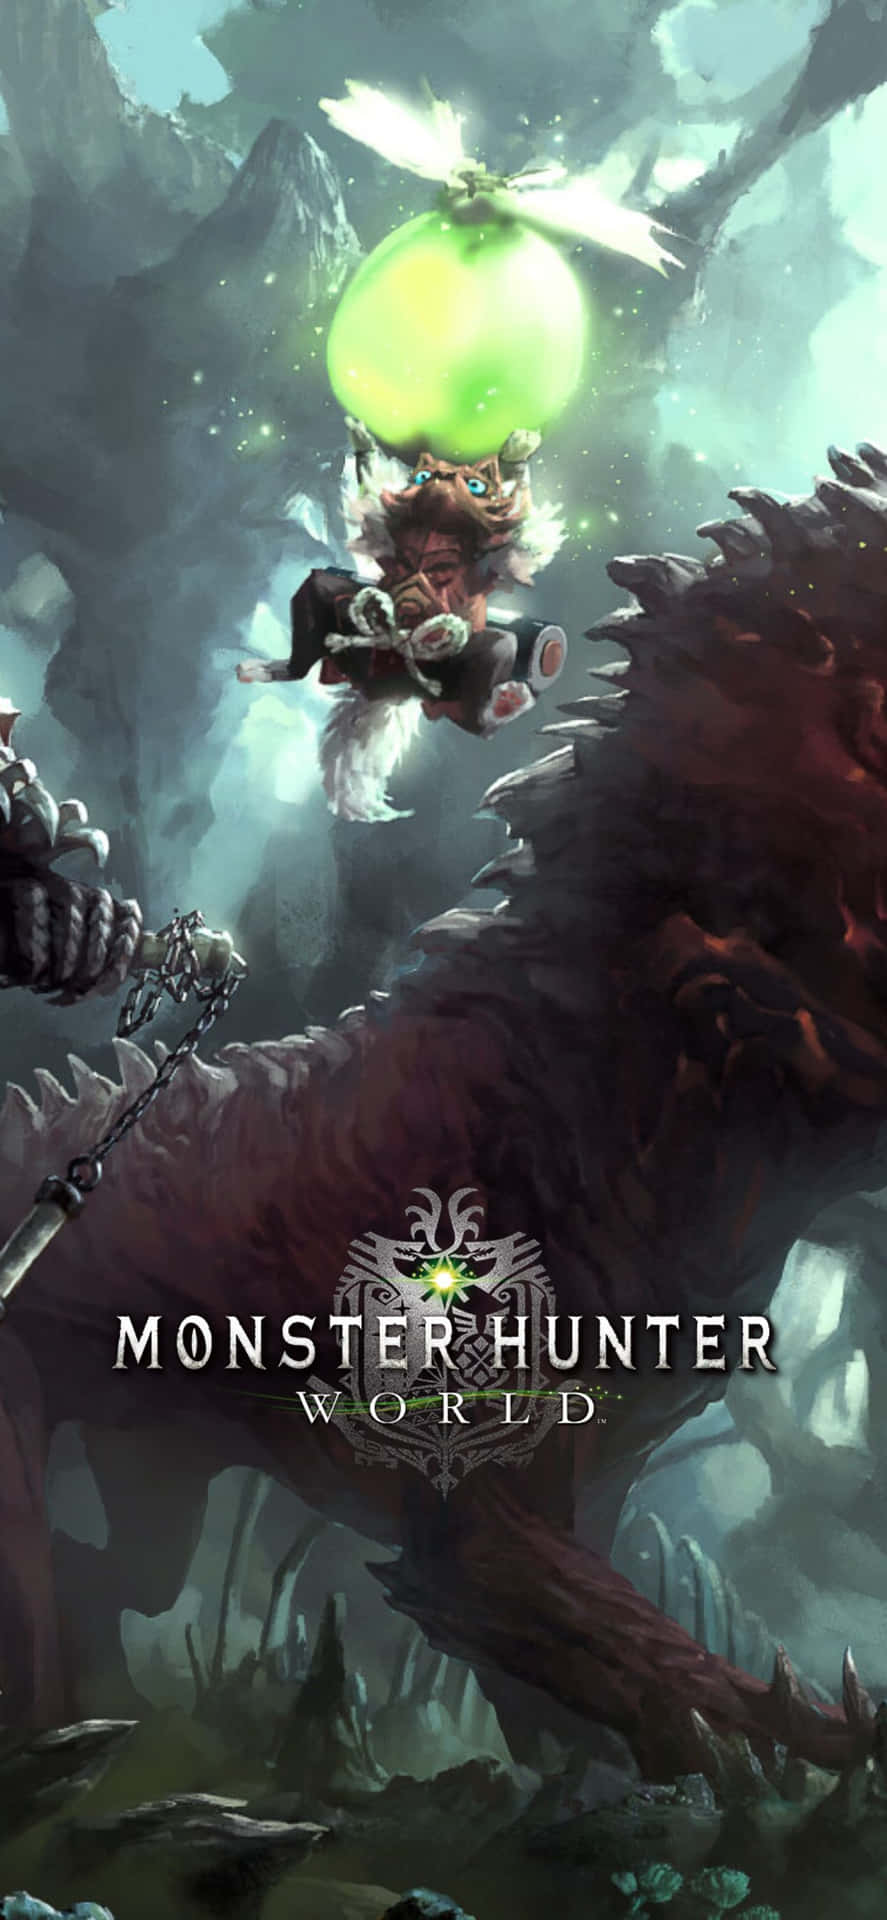 Iphonexs Max Odogaron Kroppsbakgrund Från Monster Hunter World.